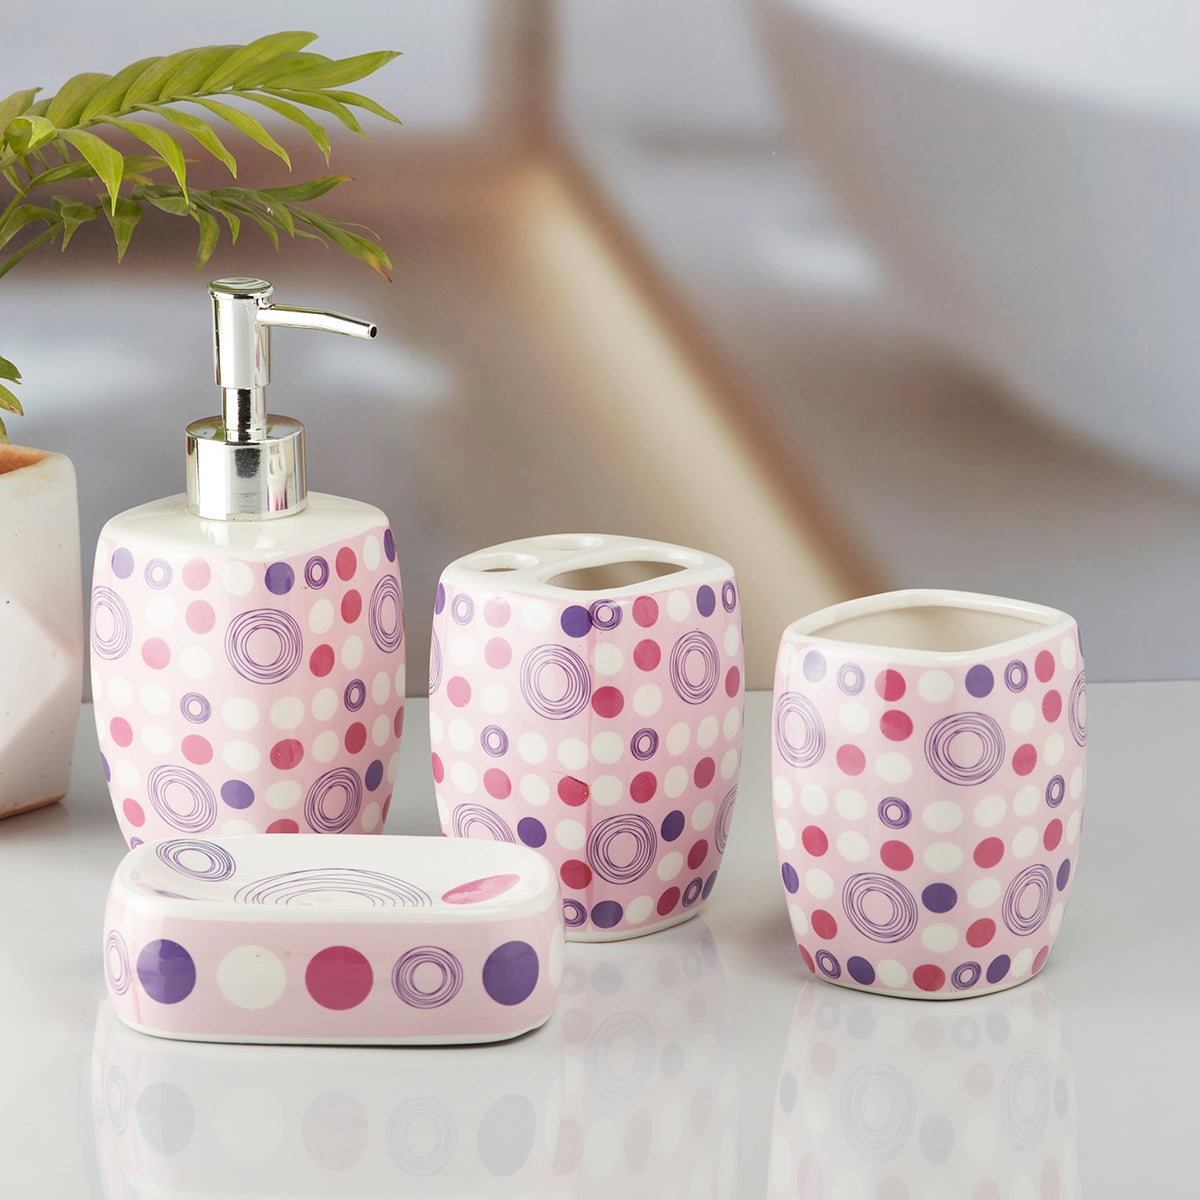 Ceramic Bathroom Accessories Set of 4 Bath Set with Soap Dispenser (10170)